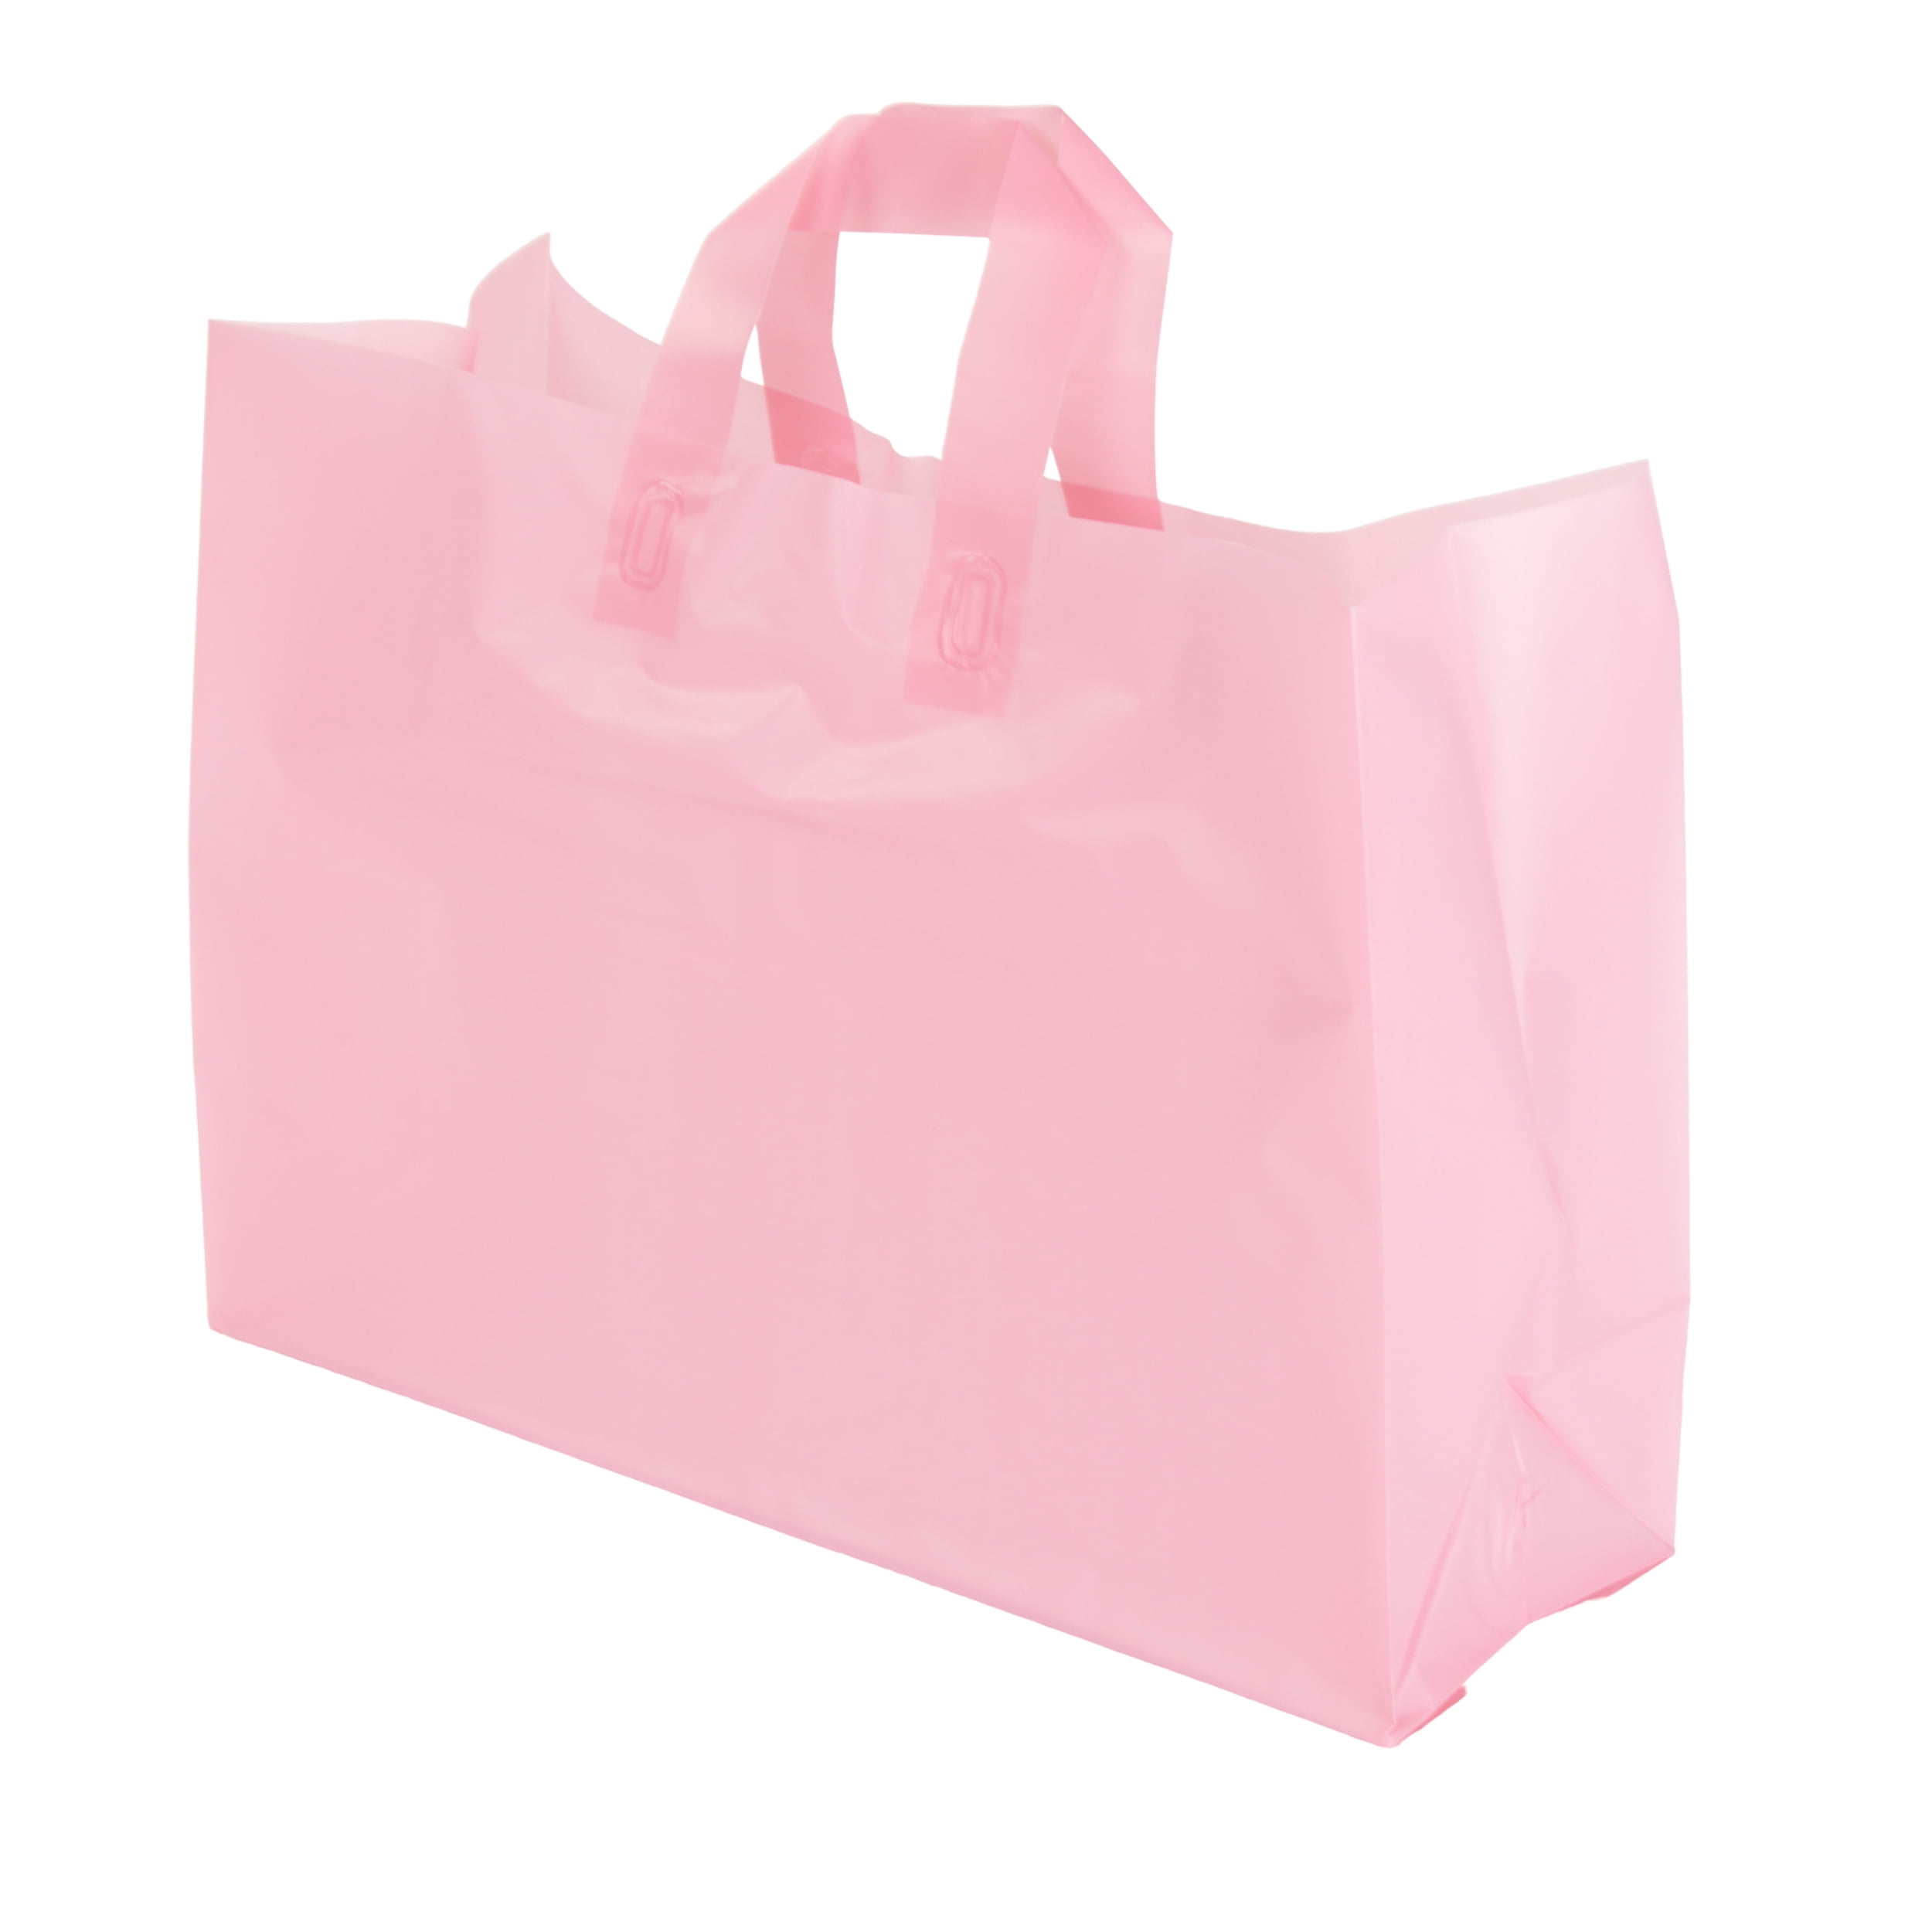 Paper Lunch Bags 12 Lb White Paper Bags 12LB Capacity - Kraft White Paper  Bags, Bakery Bags, Candy Bags, Lunch Bags, Grocery Bags, Craft Bags - #12